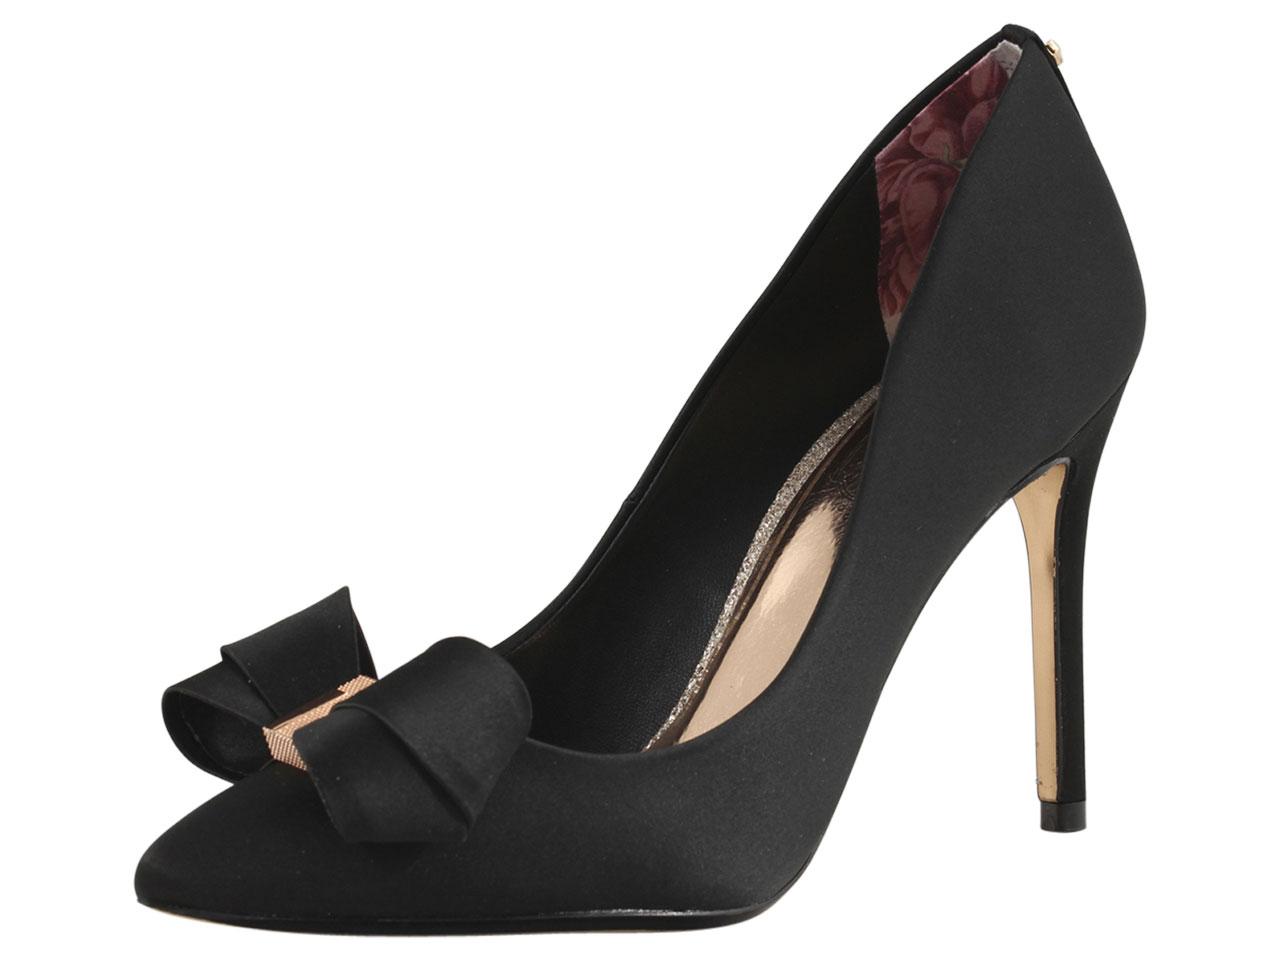 Ted Baker Women's Skalett Pumps Heels Shoes - Black - 8.5 B(M) US